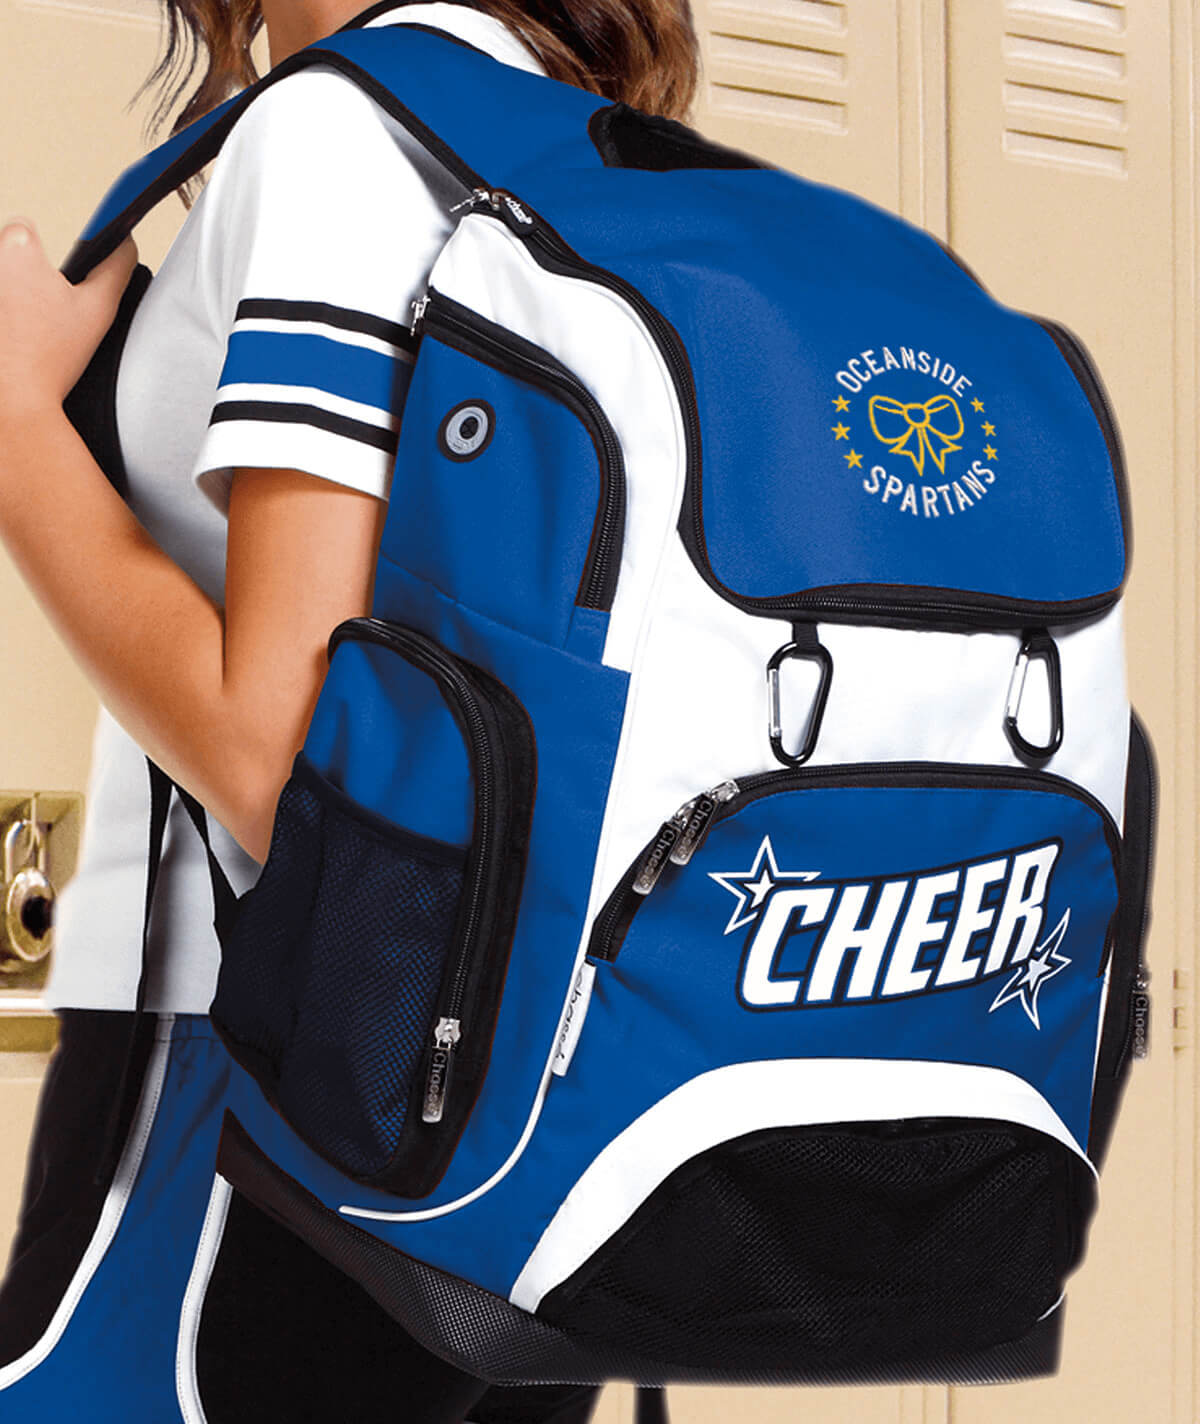 cheer bookbags